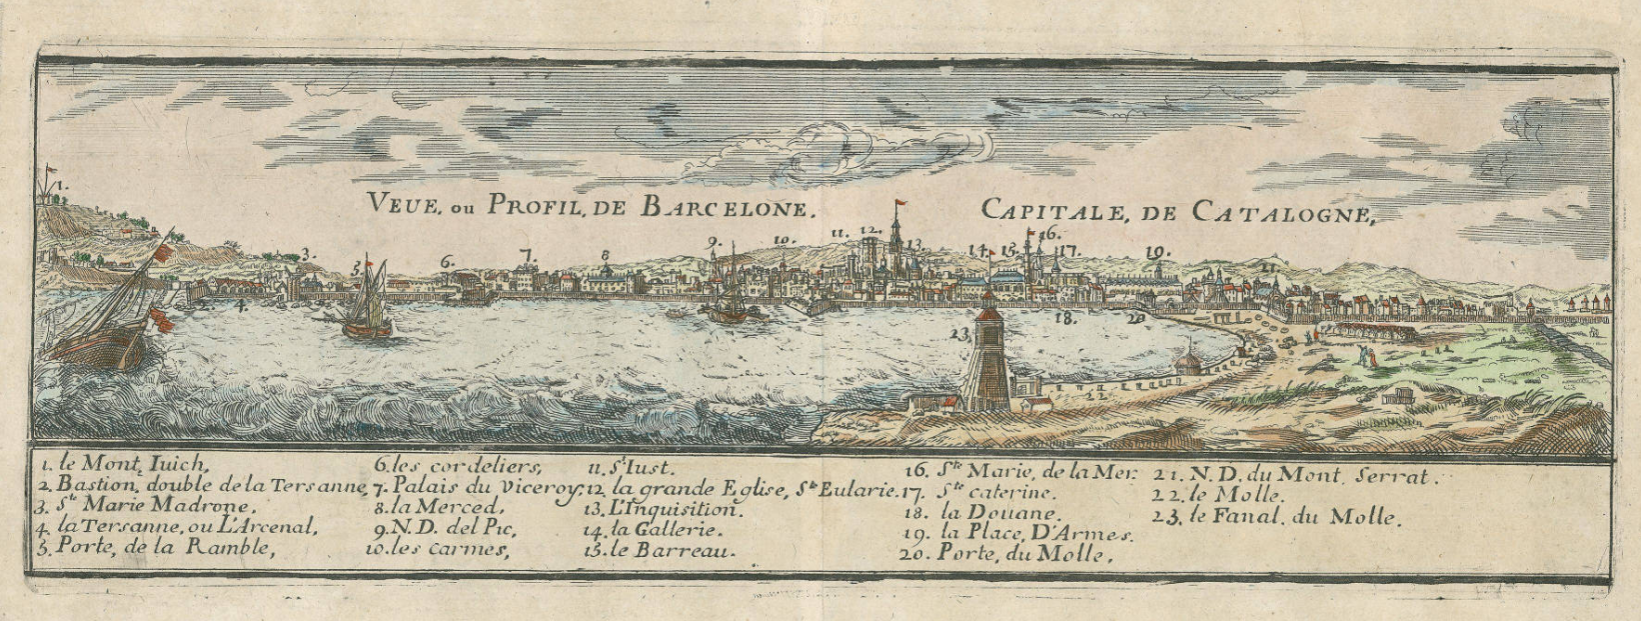 Vista de Barcelona (1696), obra de Nicolas de Fer. Fuente Cartoteca de Catalunya